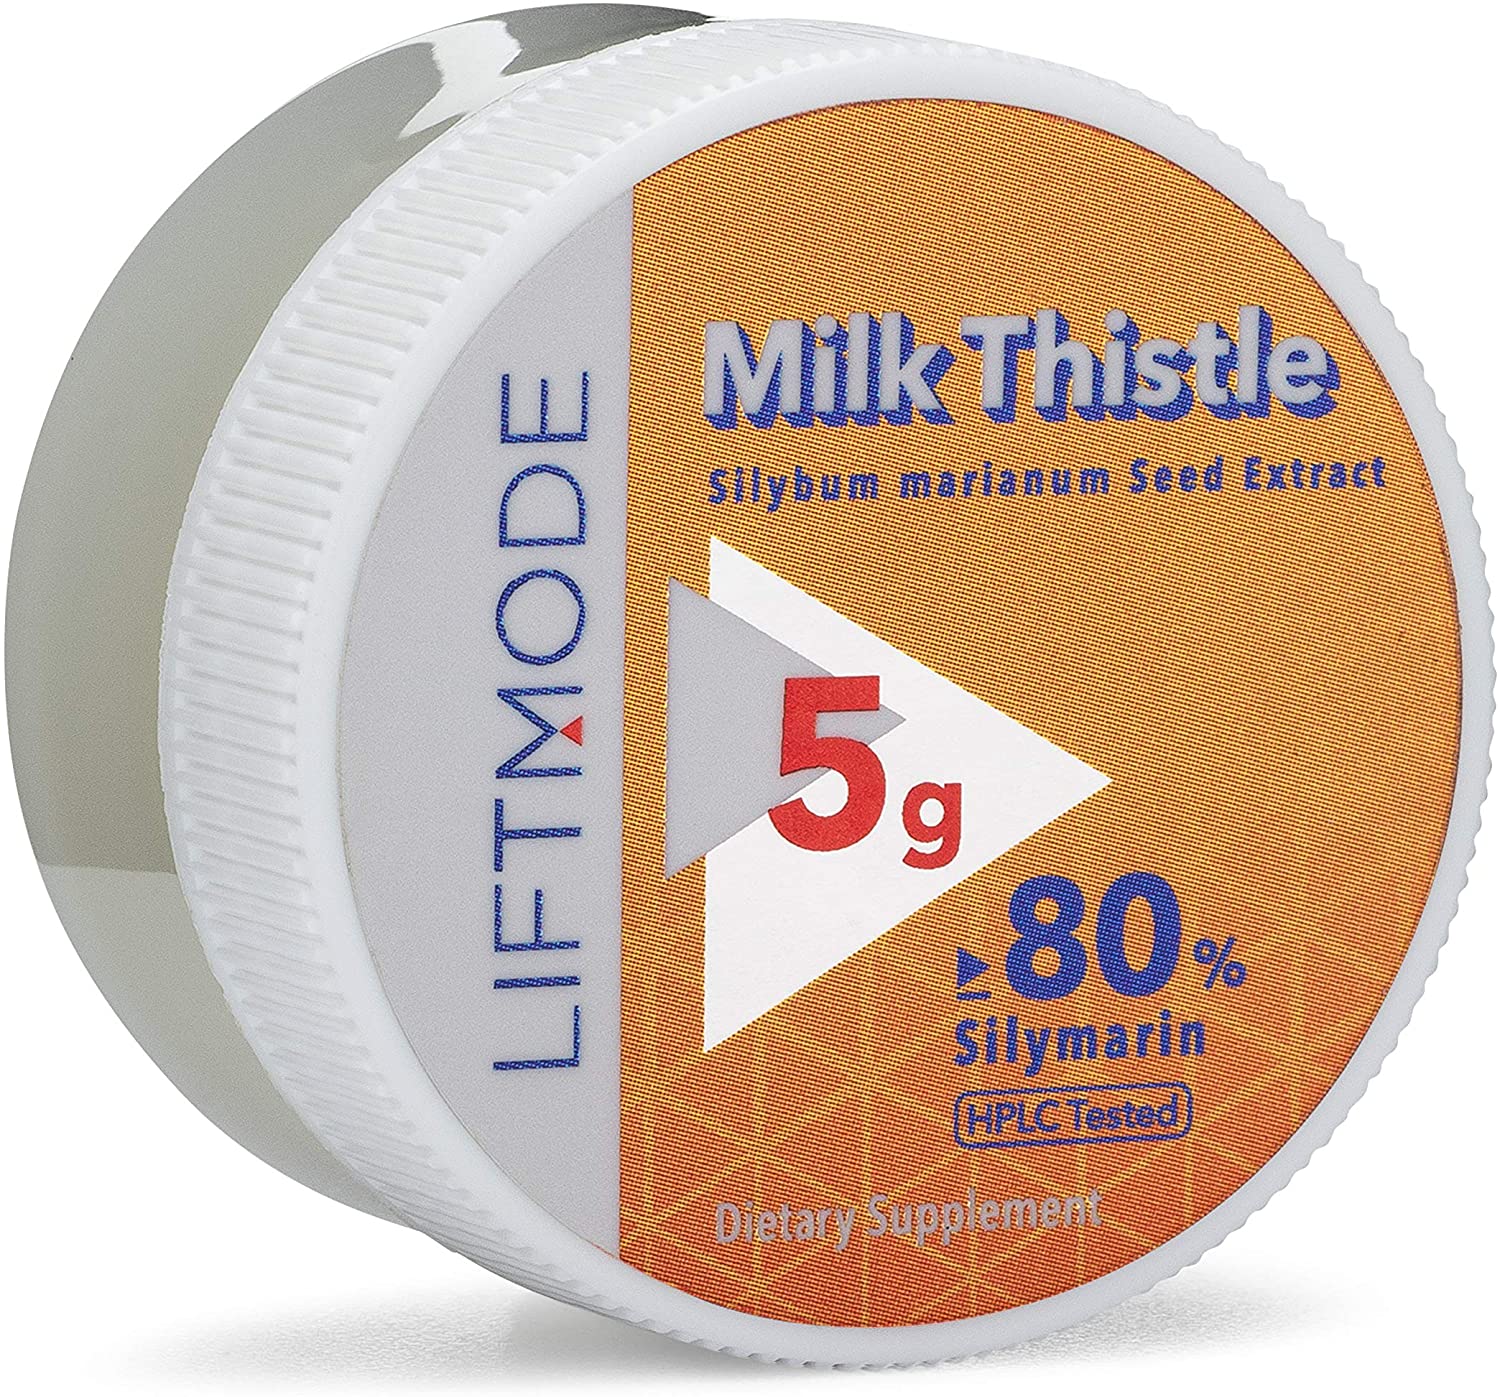 Liftmode Milk Thistle Extract Powder - 5 g